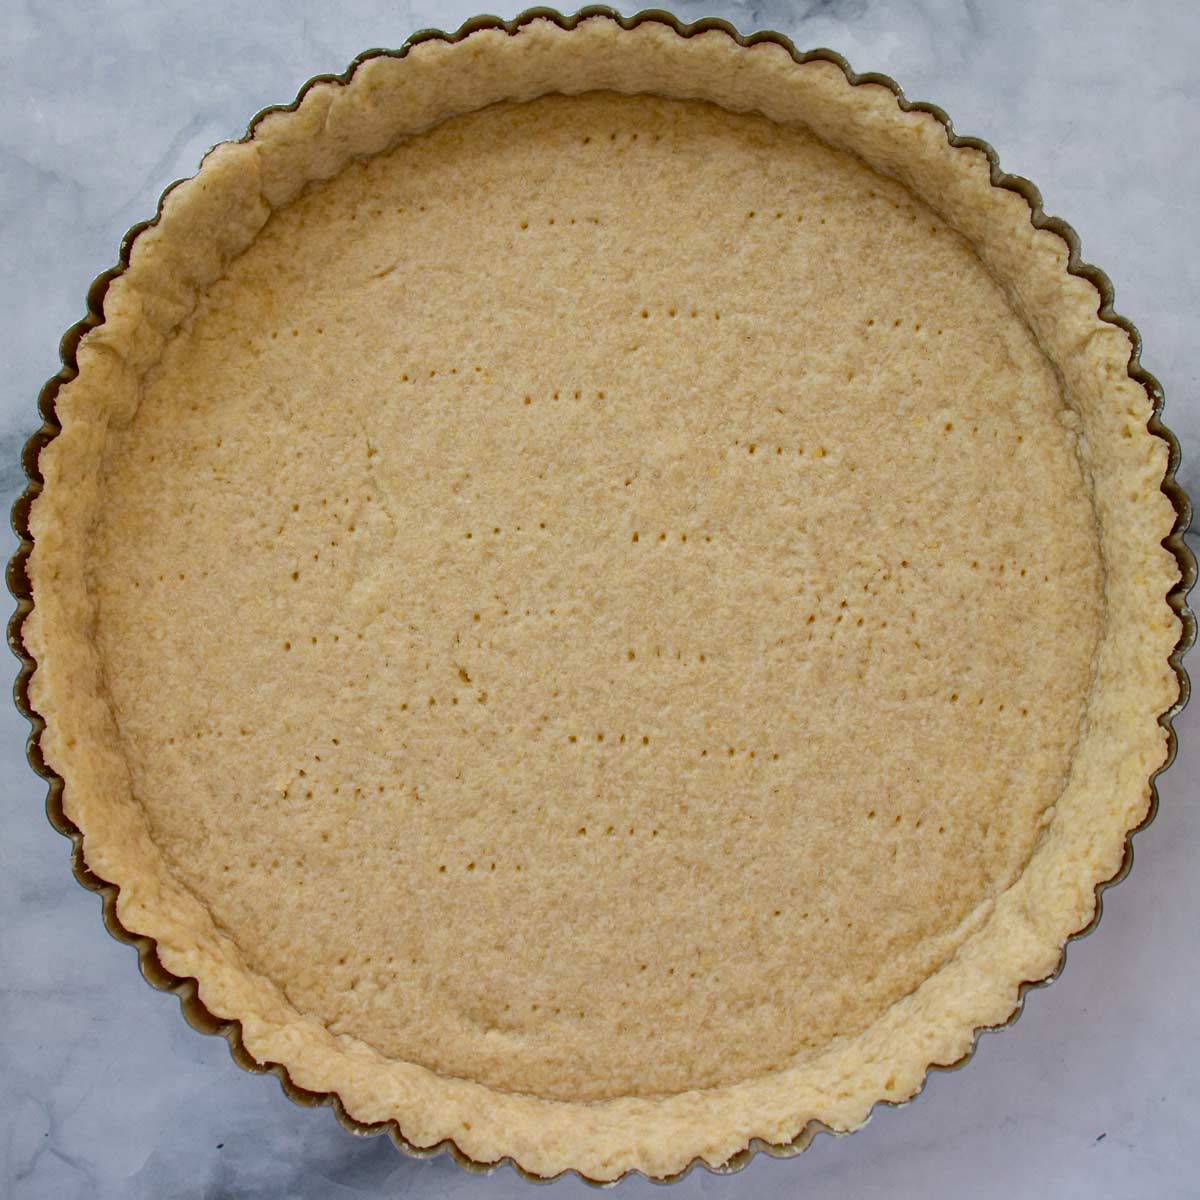 A blind baked tart crust in a round tart pan.